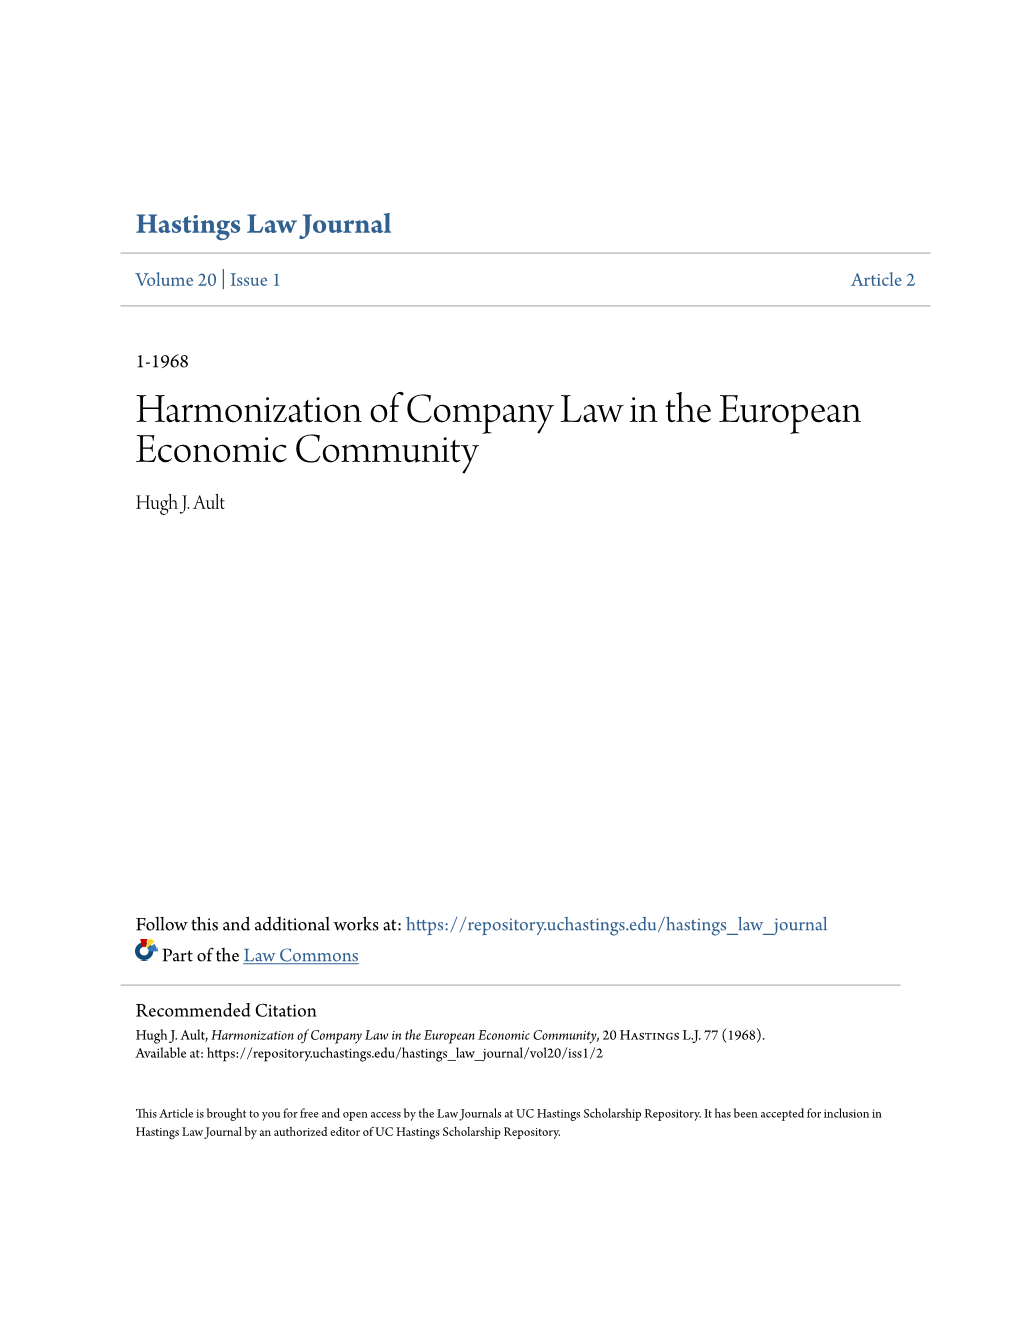 Harmonization of Company Law in the European Economic Community Hugh J